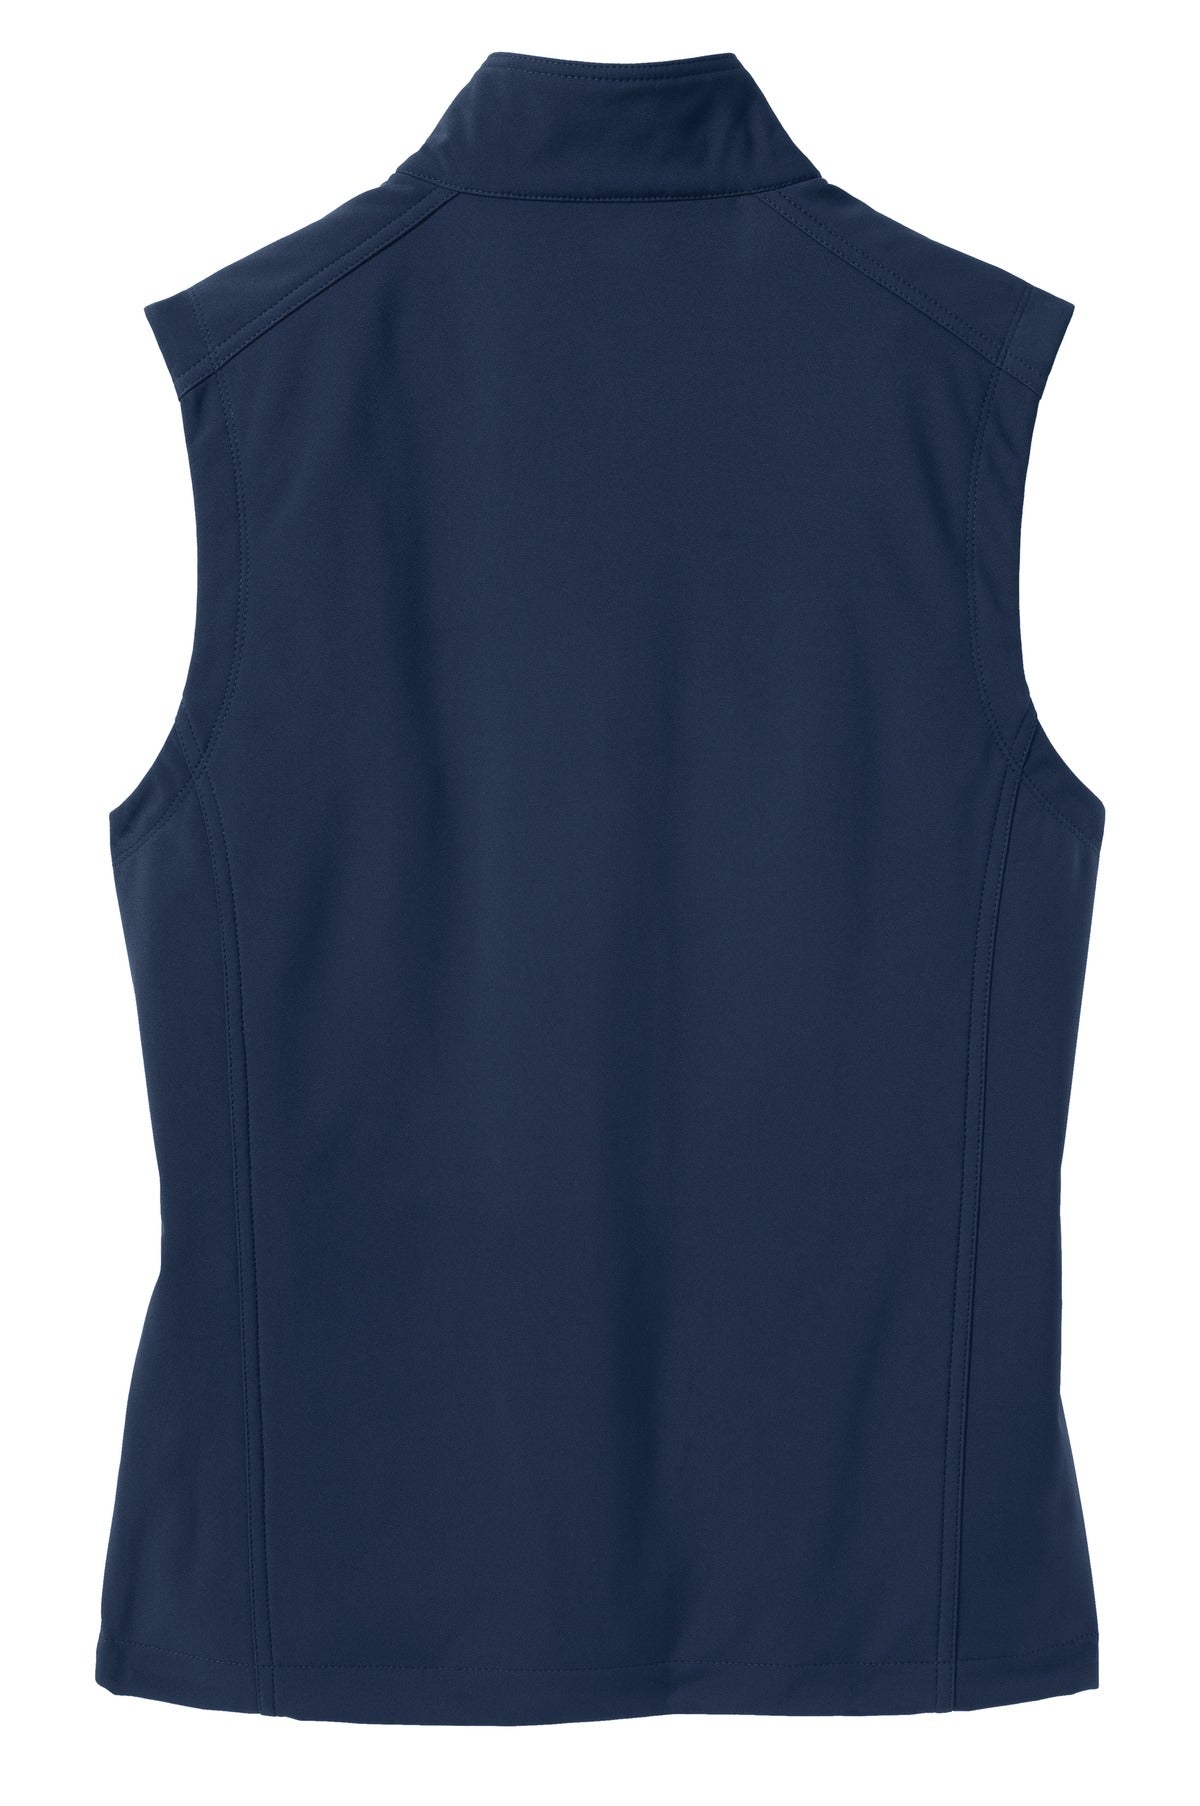 Mafoose Men's Core Soft Shell Vest Dress Blue Navy